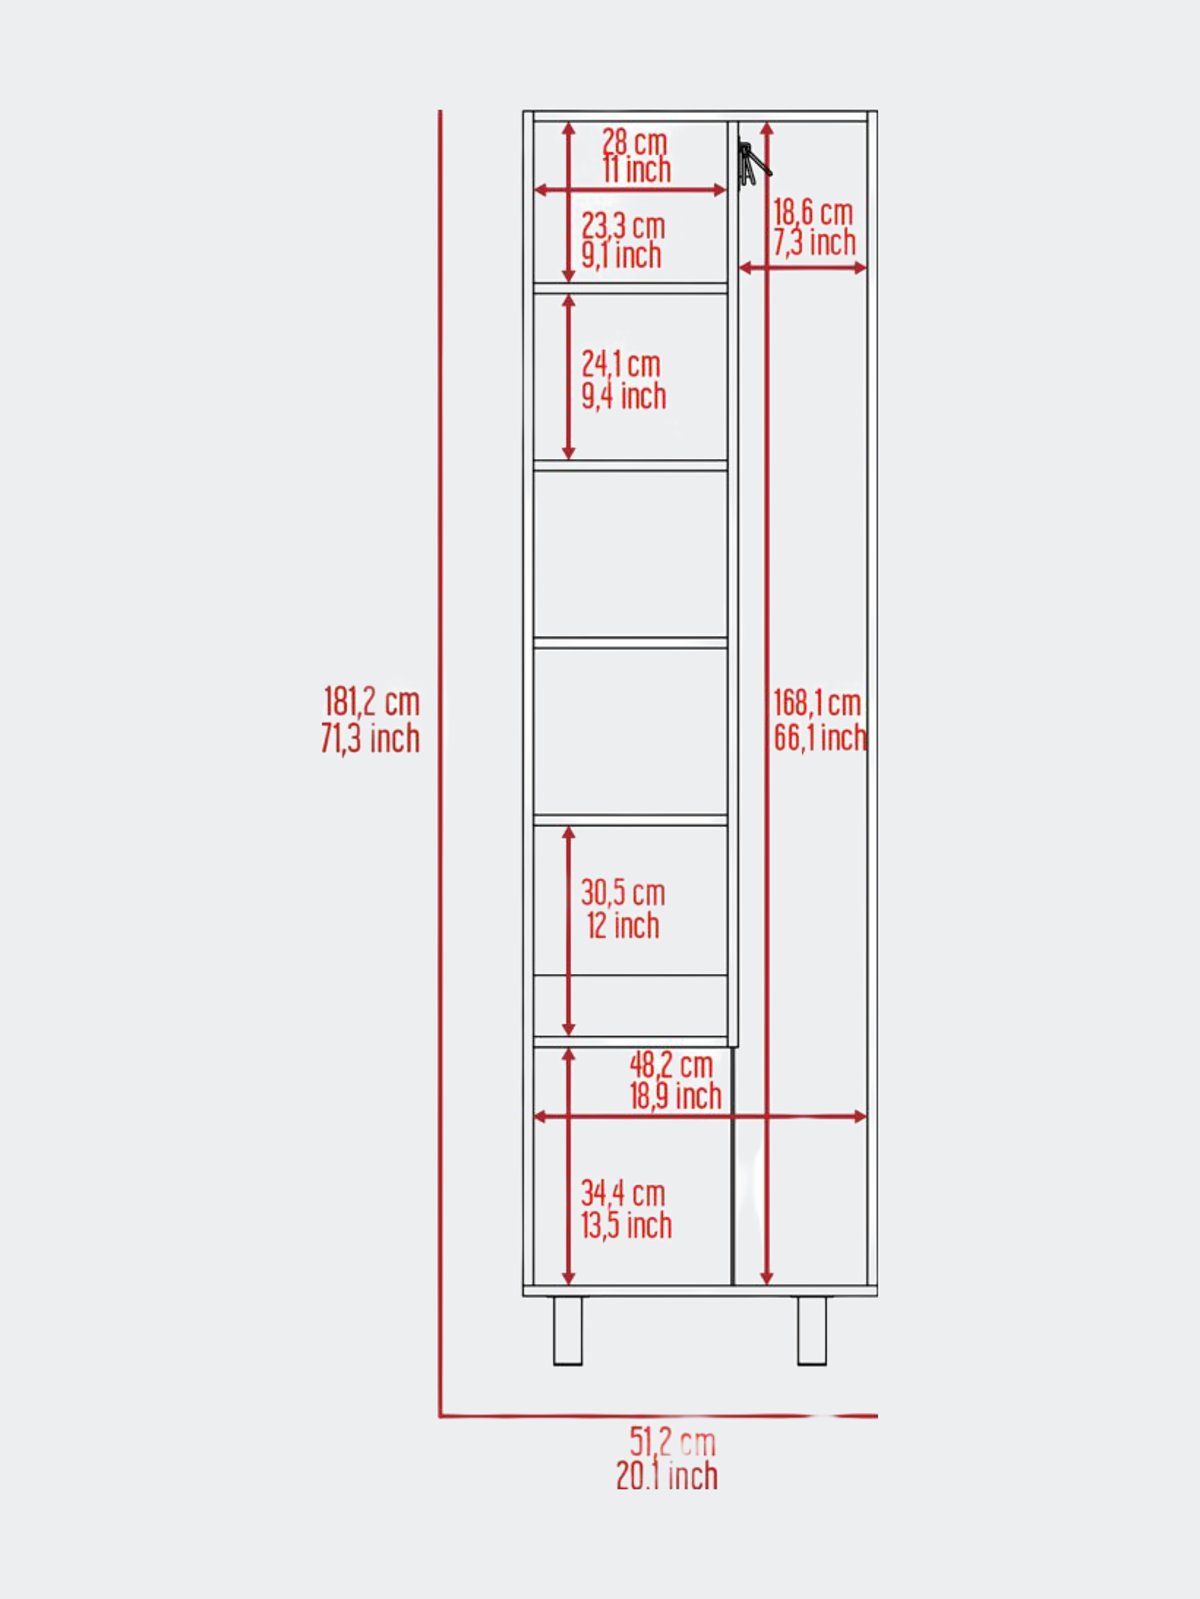 https://images.verishop.com/fm-furniture-norway-broom-closet-pantry-five-shelves-double-door-cabinet/M00691989333731-1373712687?auto=format&cs=strip&fit=max&w=1200